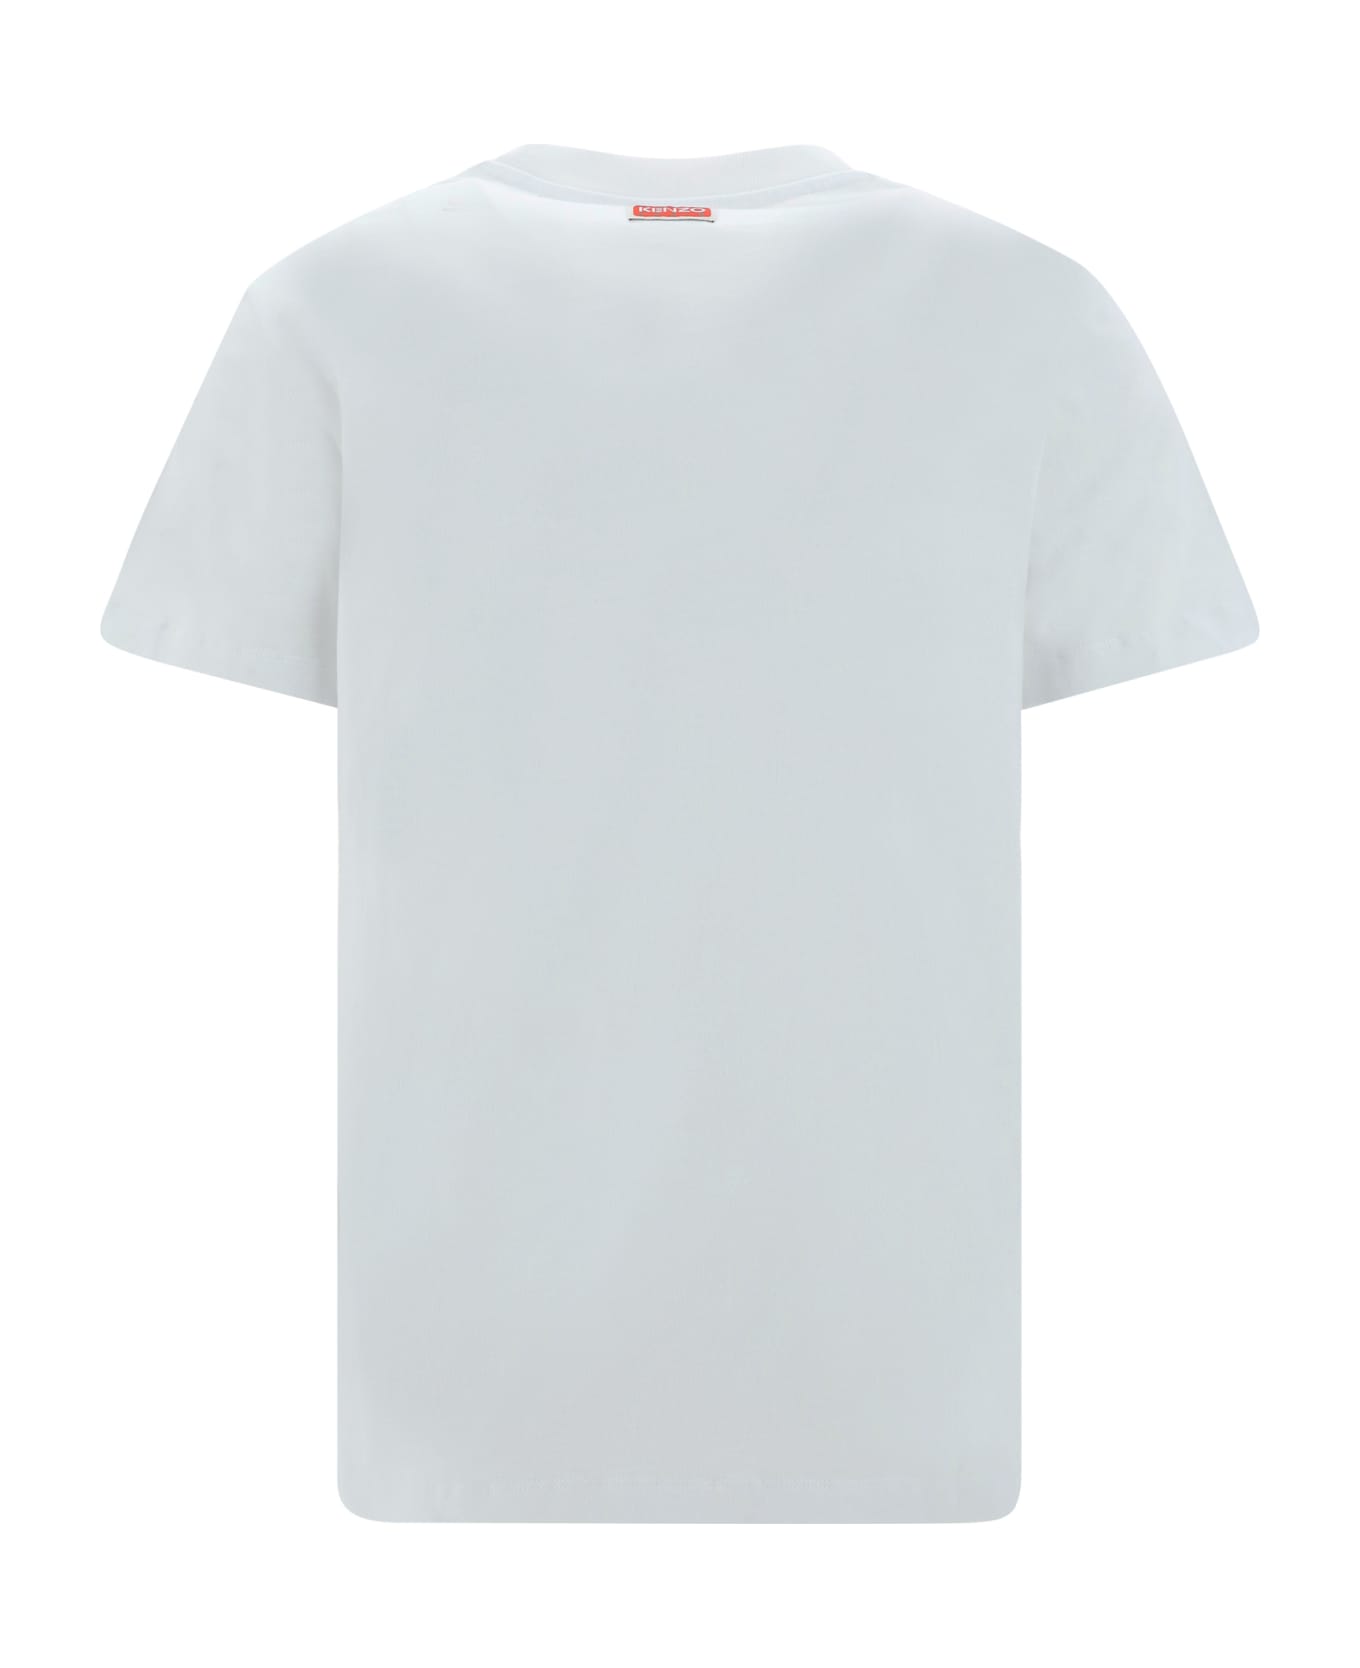 Kenzo Tiger Varsity Loose T-shirt - Off White